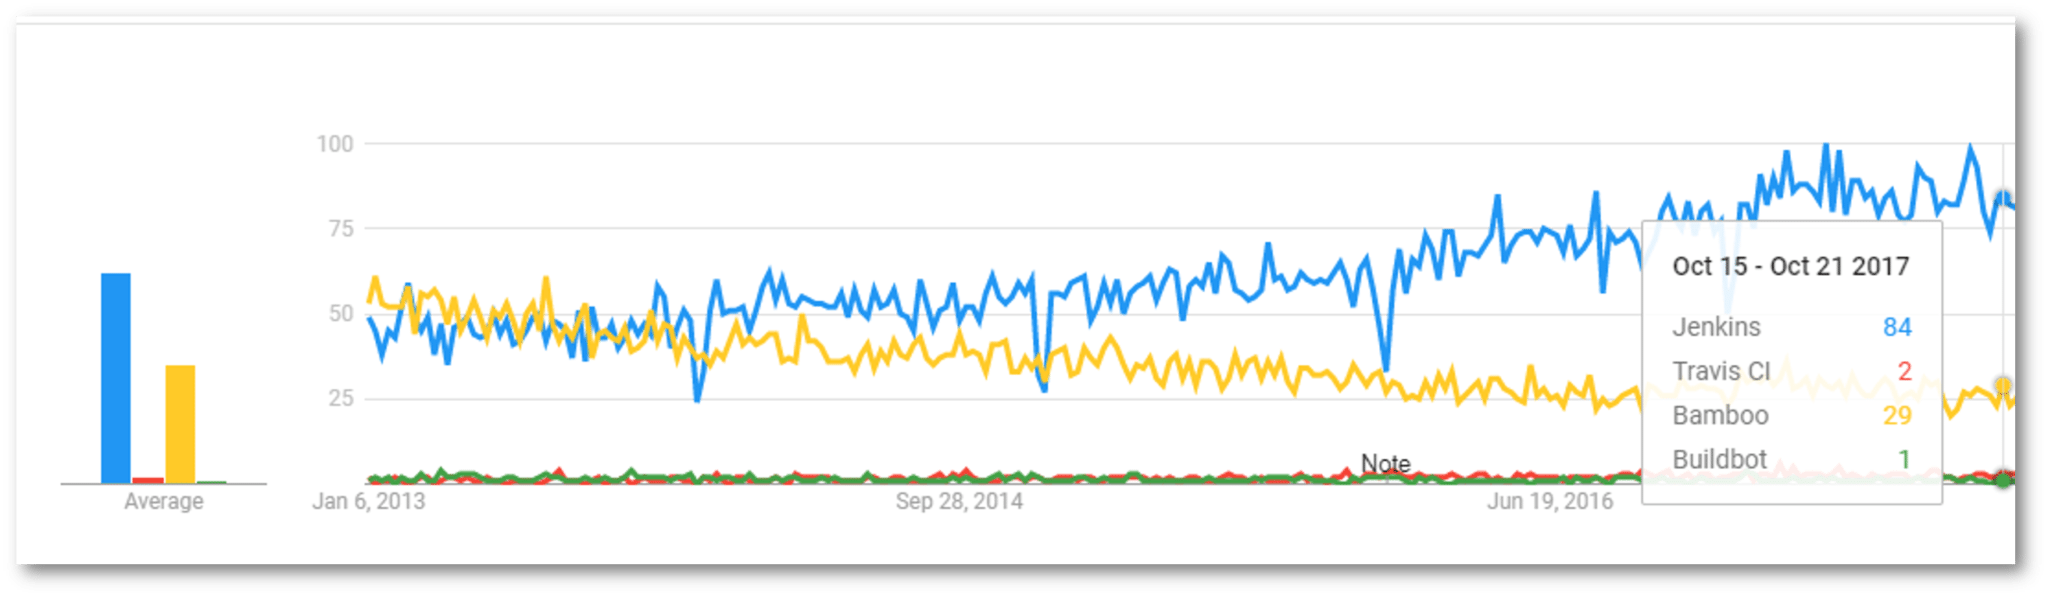 Devops Blog - Jenkins Google Trend - Edureka